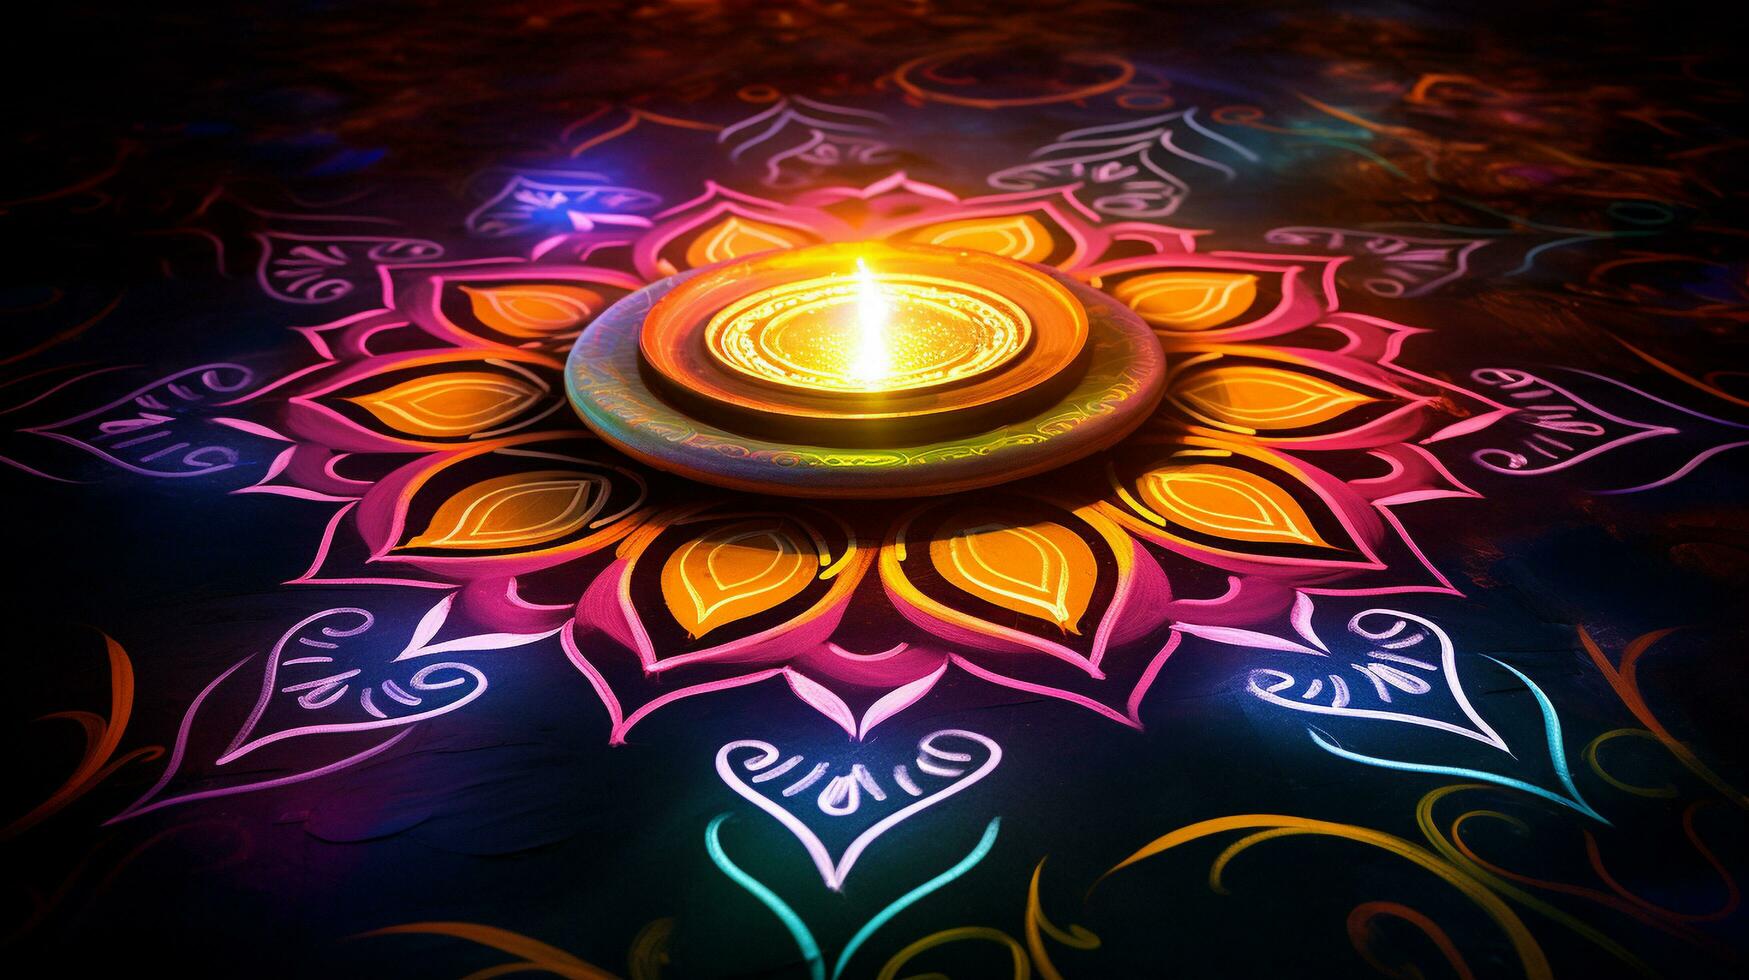 A Captivating Display of Diwali Radiance, AI Generative photo